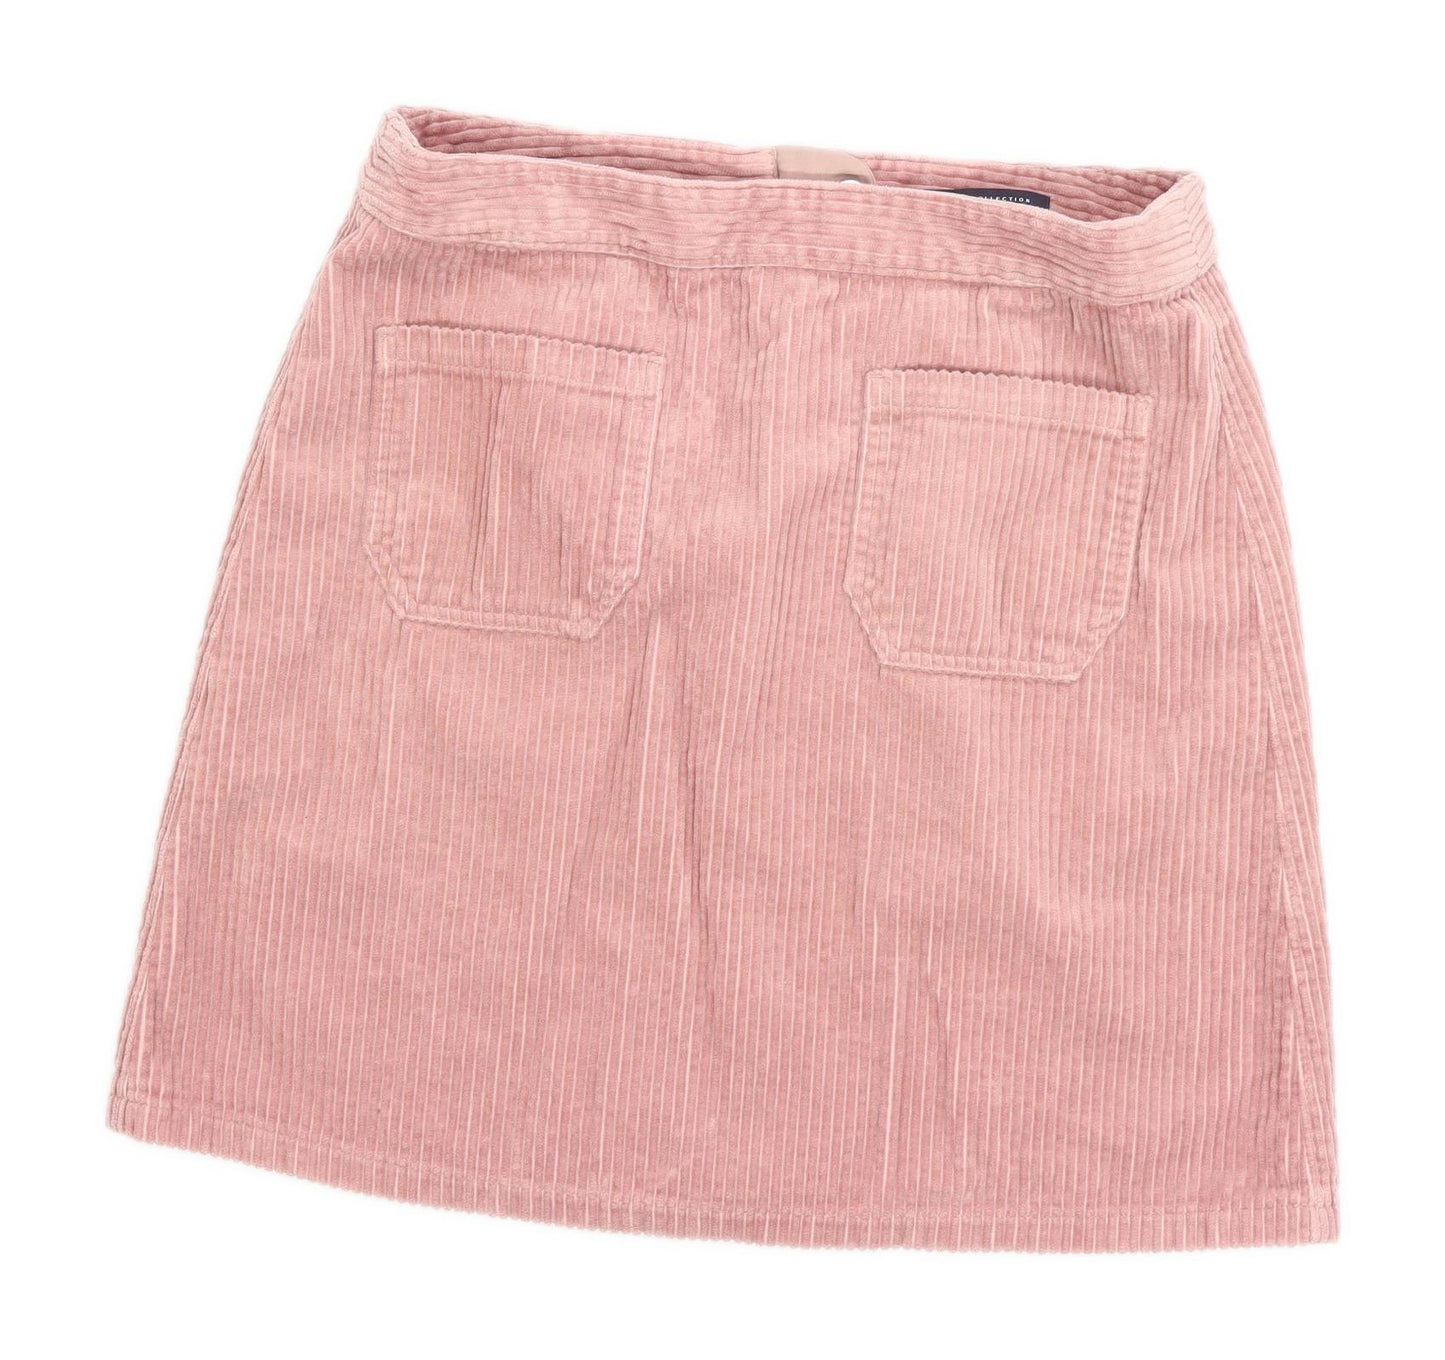 M&Co Womens Size W30 Corduroy Pink Skirt (Regular)